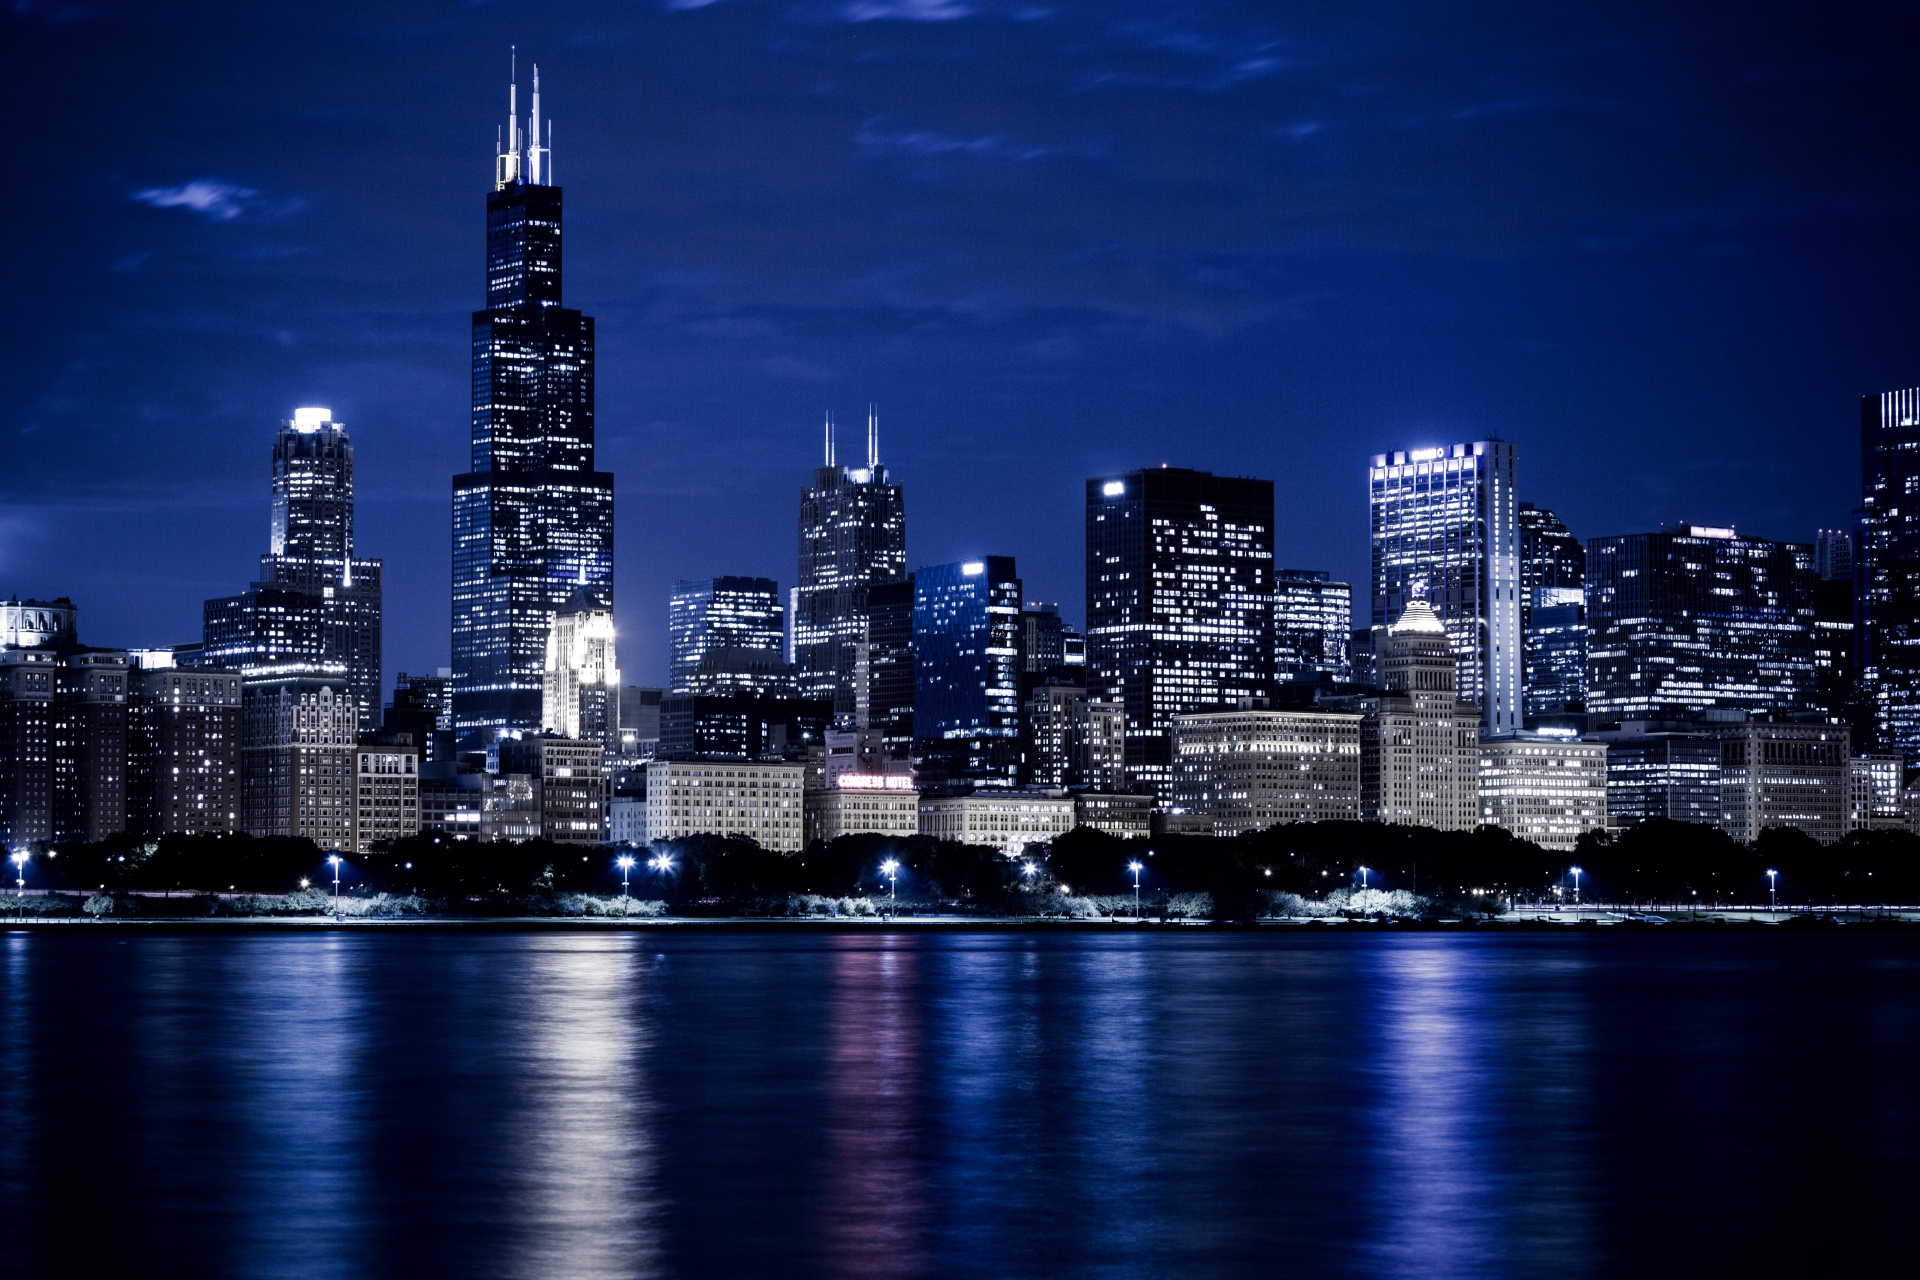 Free photo: Chicago skyline - Architecture, Midwest, Urban - Free